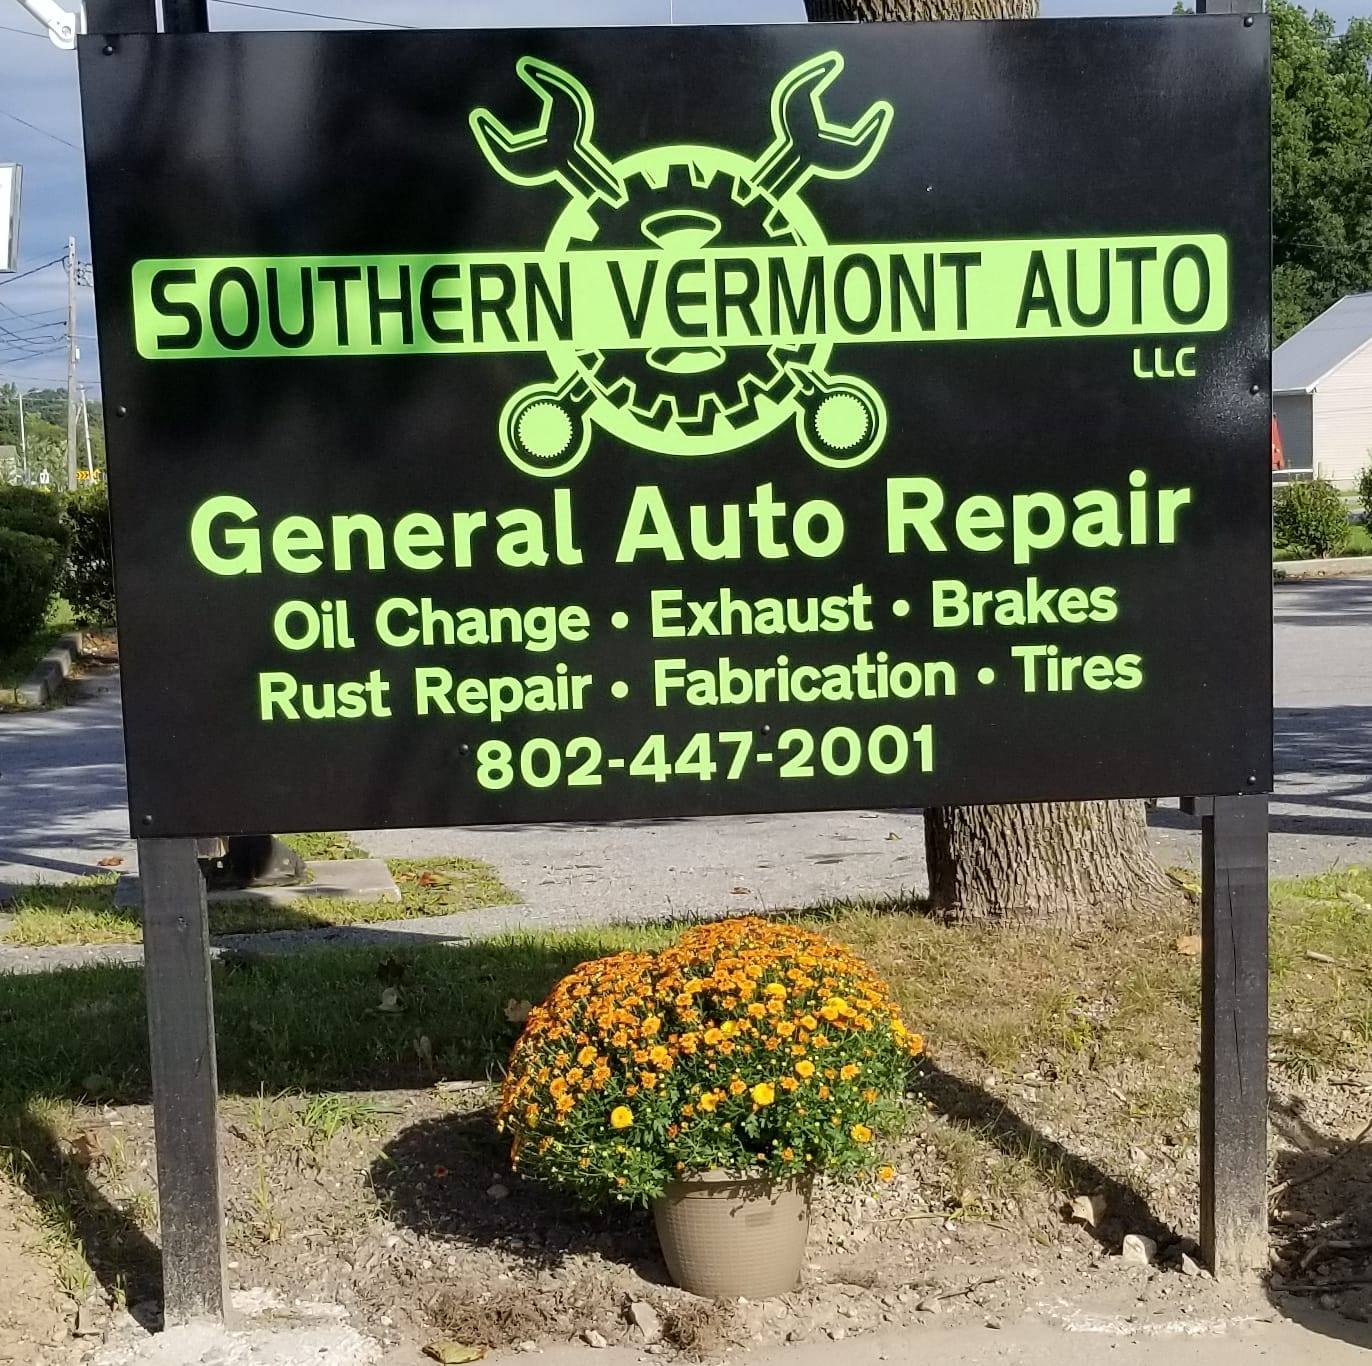 Southern Vermont Auto